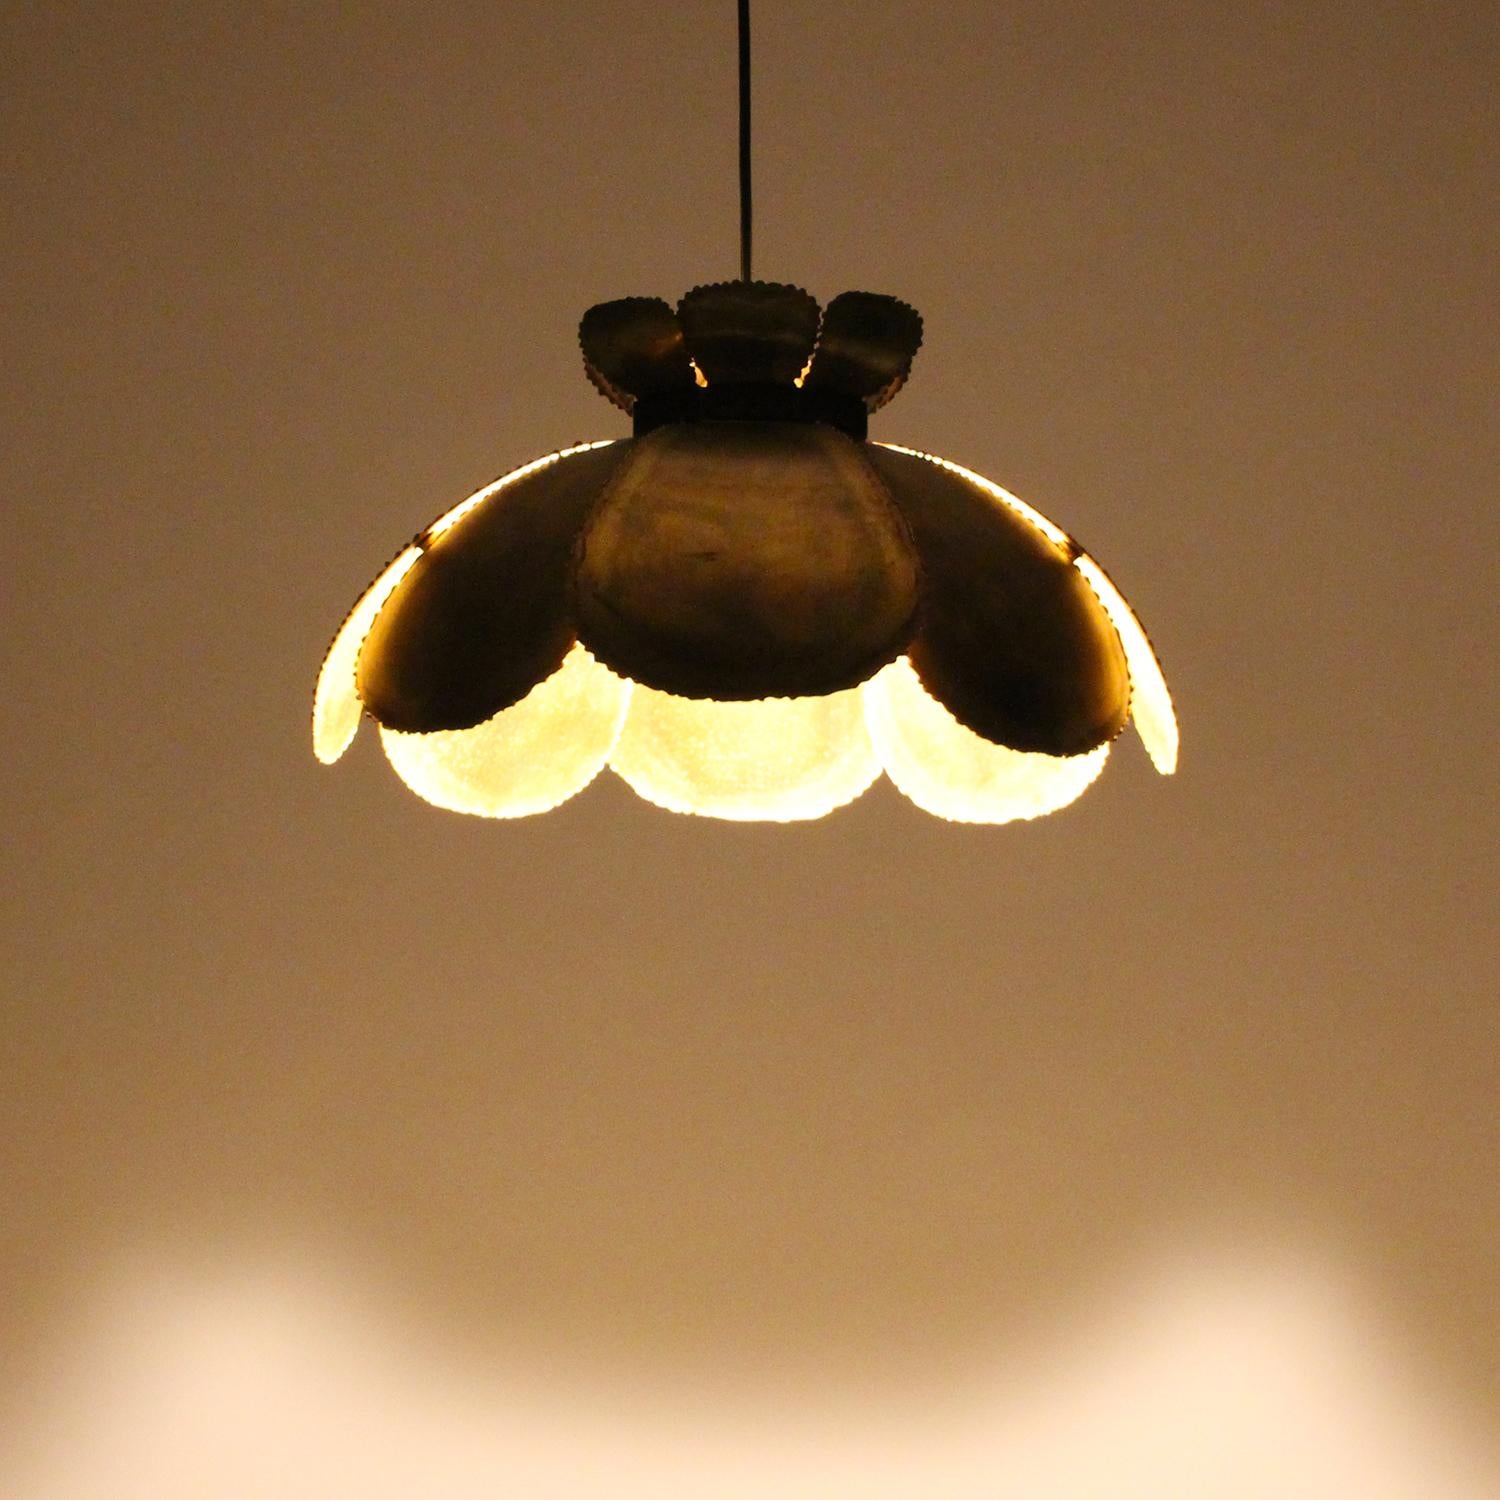 Mid-20th Century Type 6436 Lamp by Holm Sorensen 1960s. Large Brutalist Danish Hanging Light